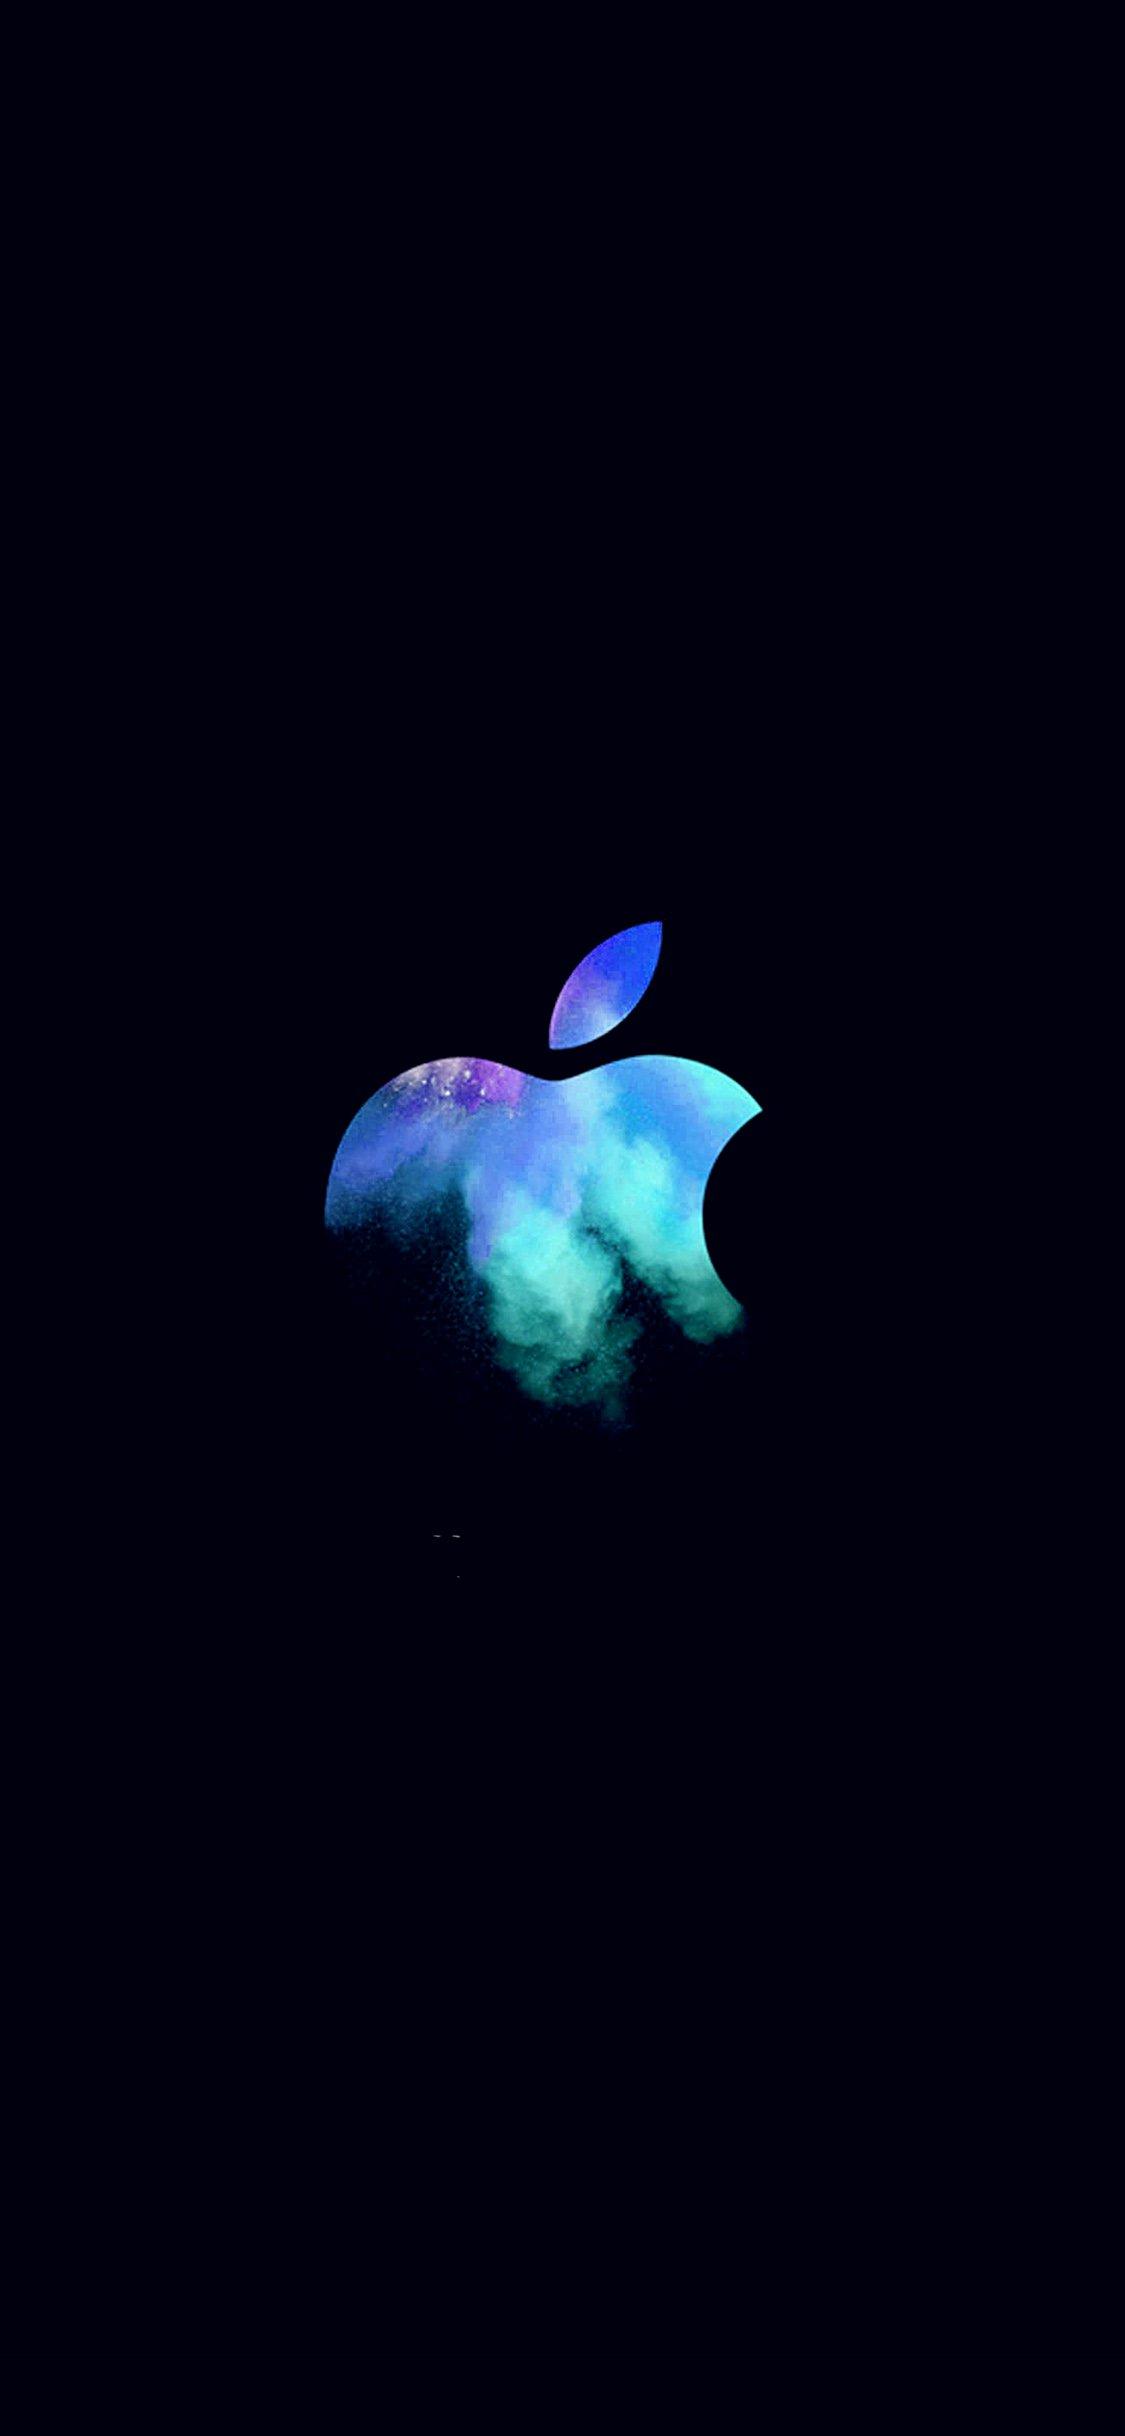 iPhone X wallpaper. apple mac event logo